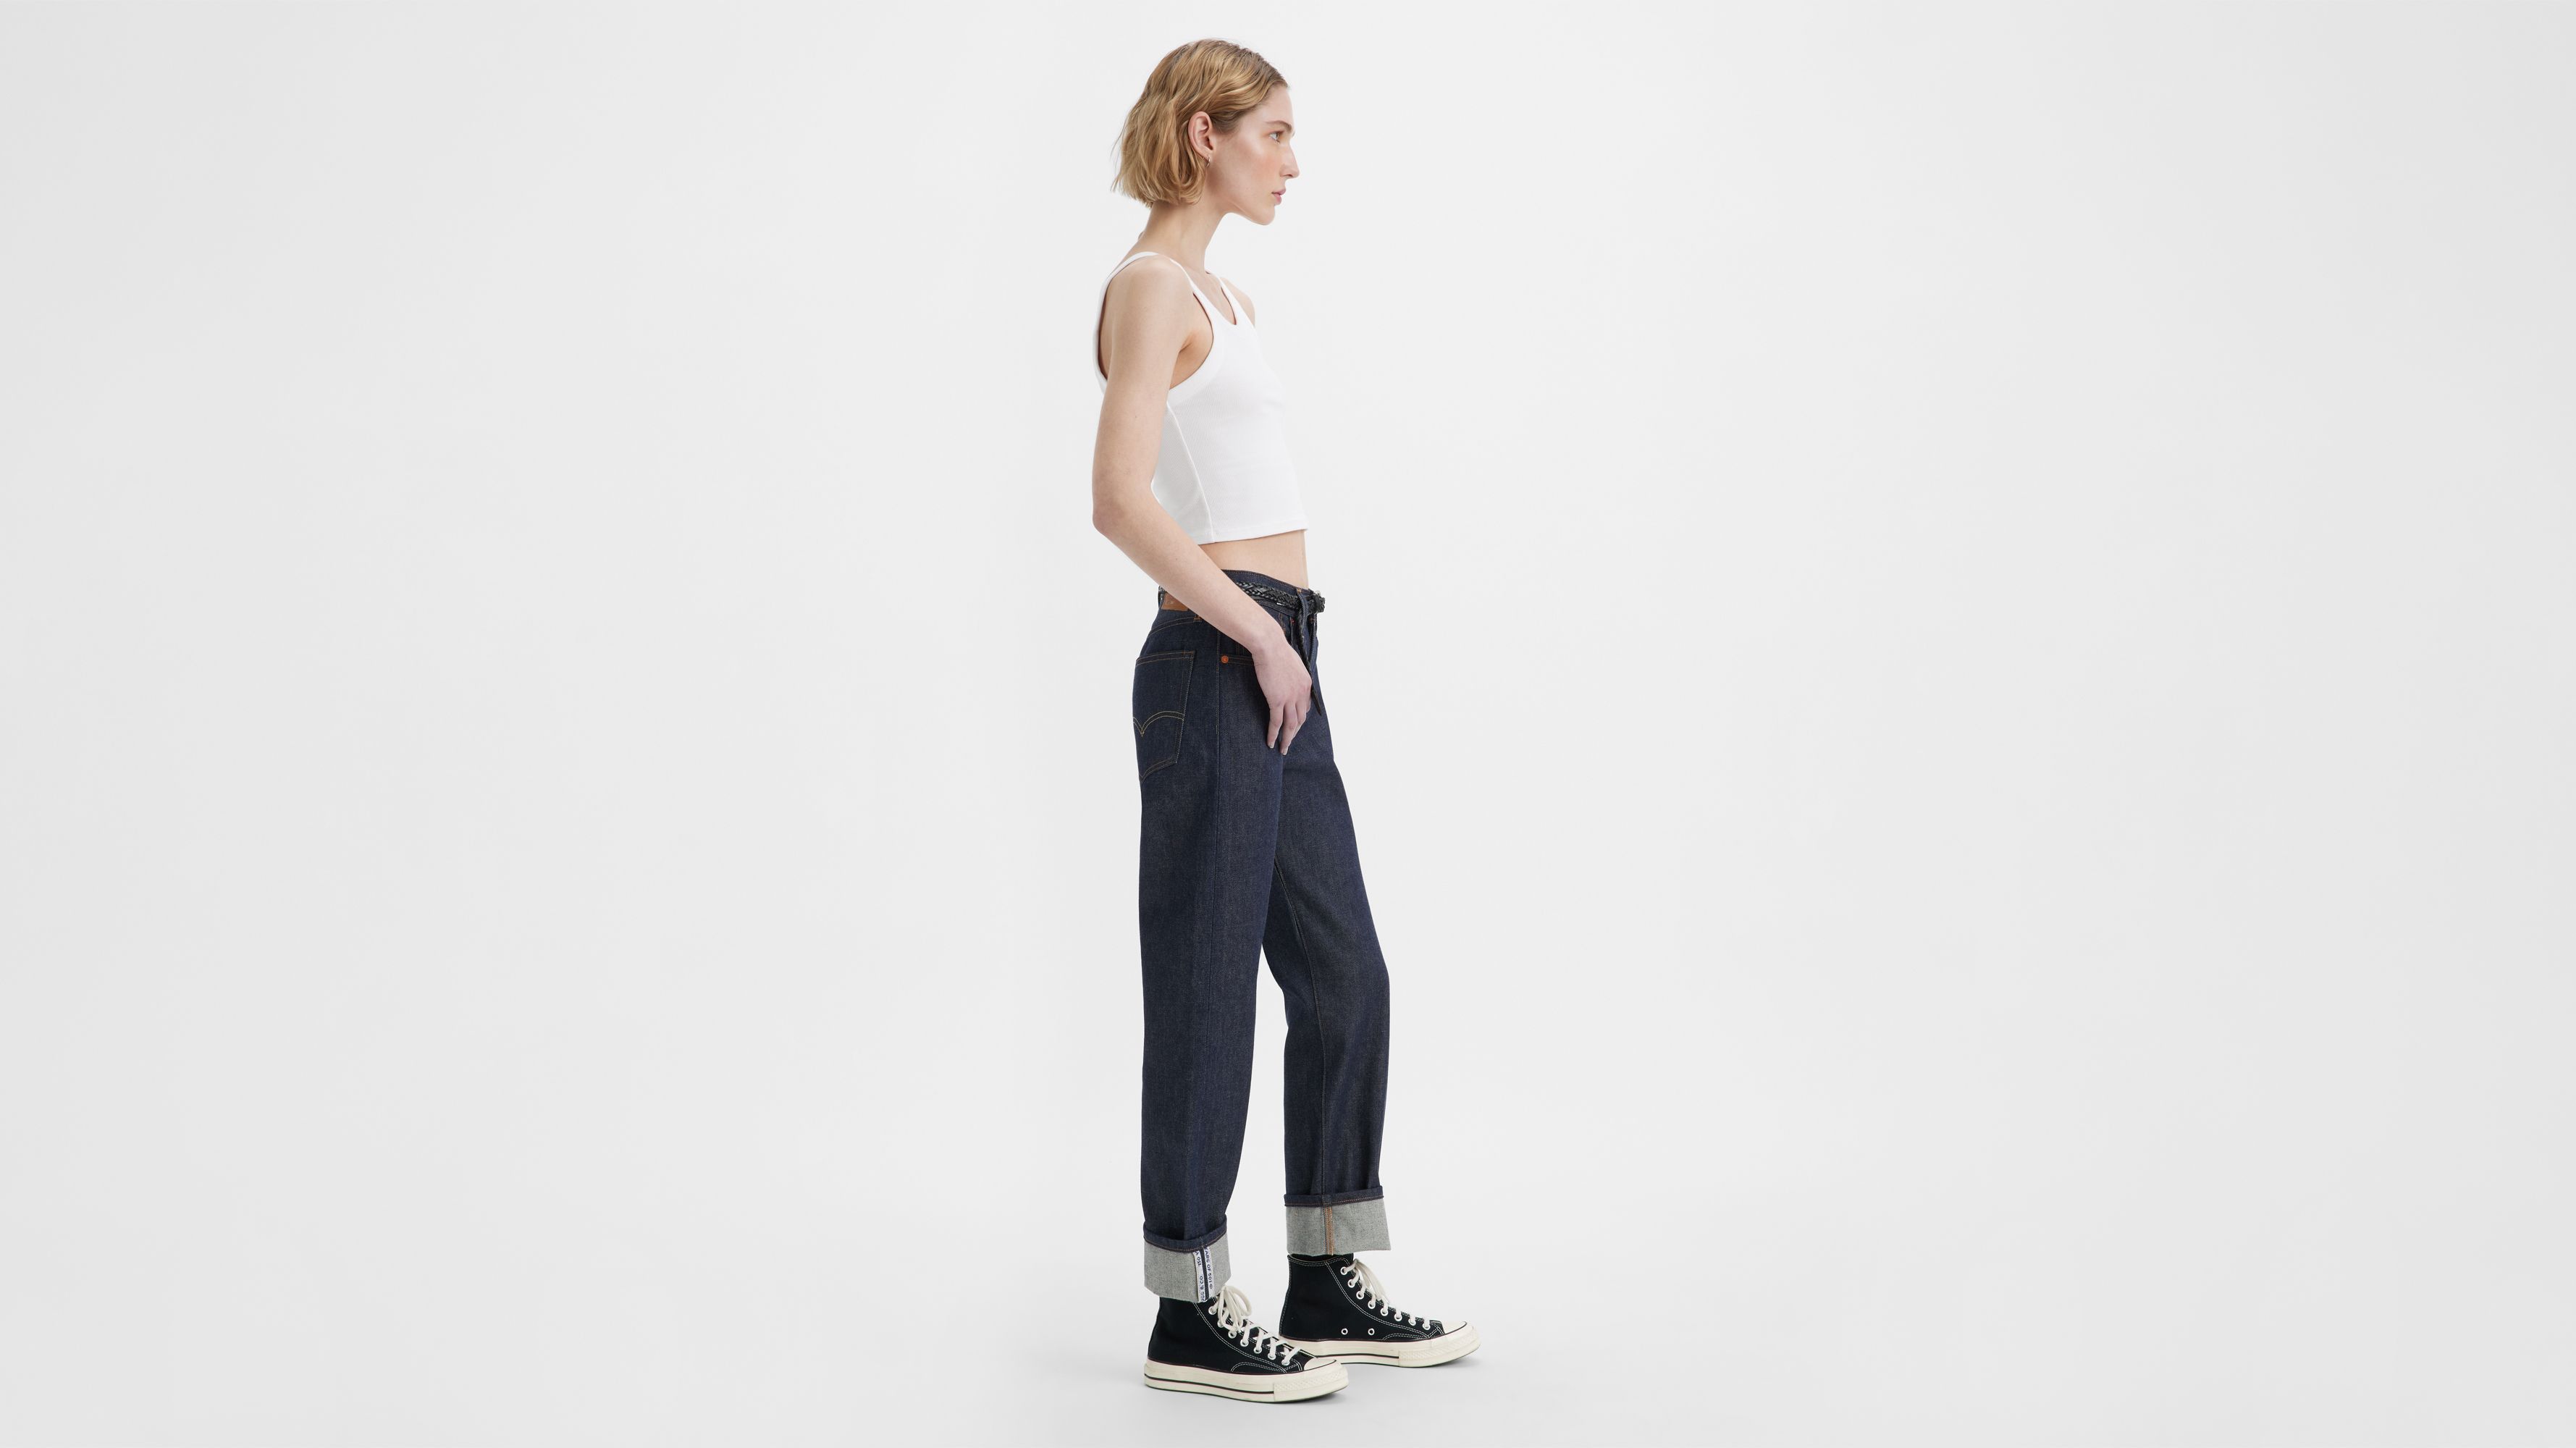 501® Original Fit Selvedge Women's Jeans - Black